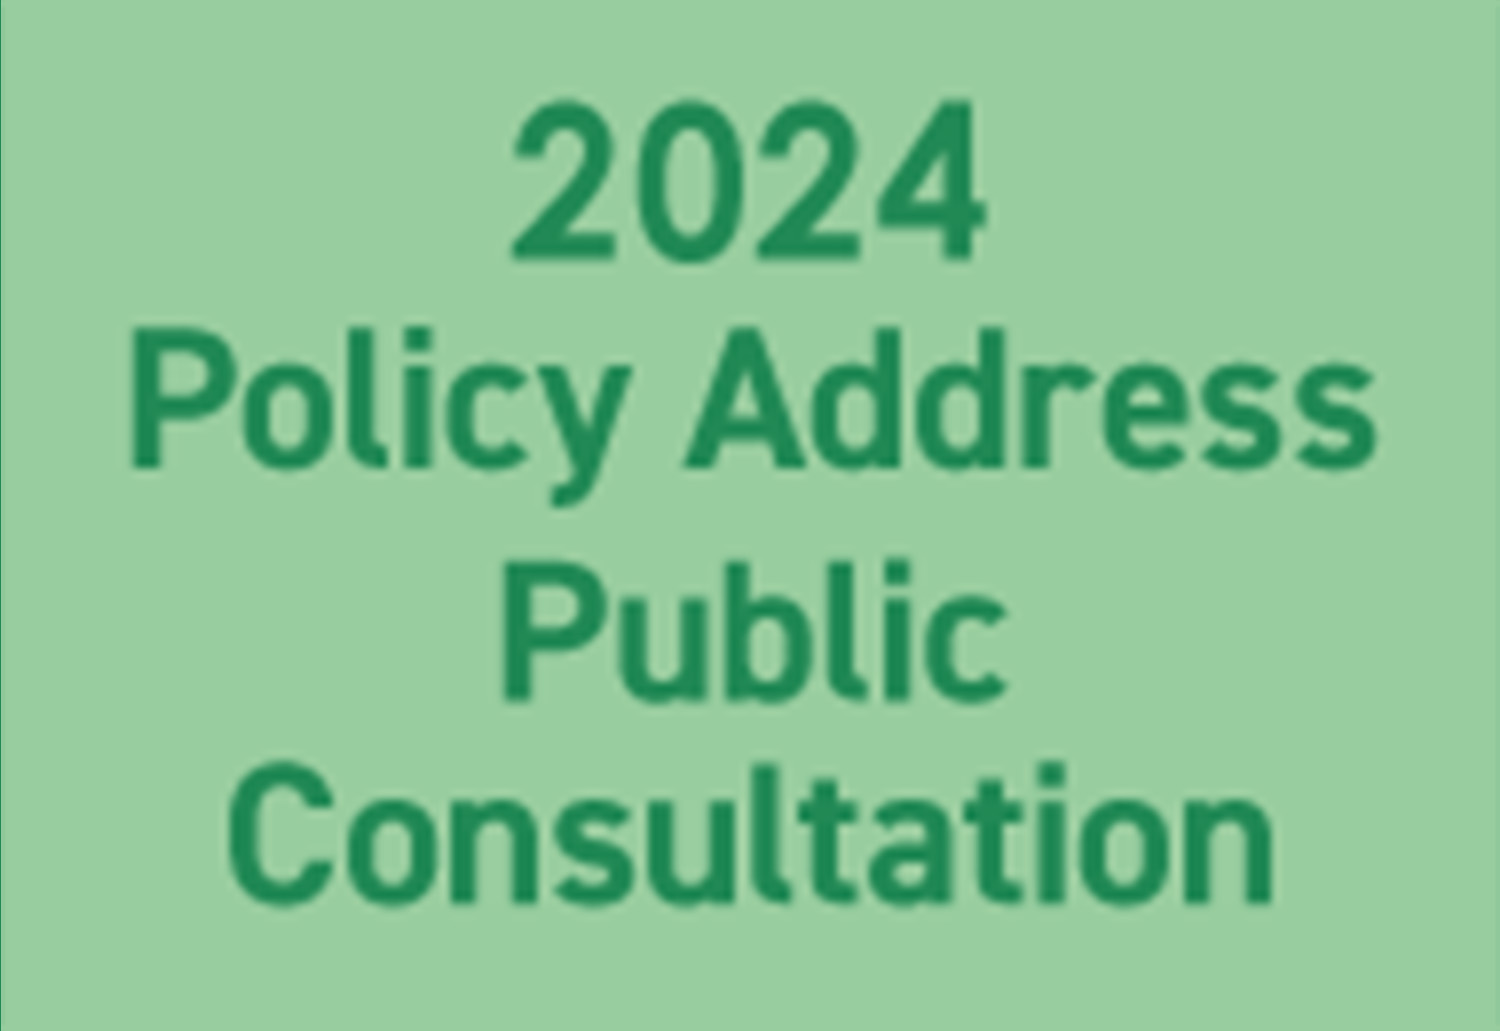 2024 Policy Address Public Consultation